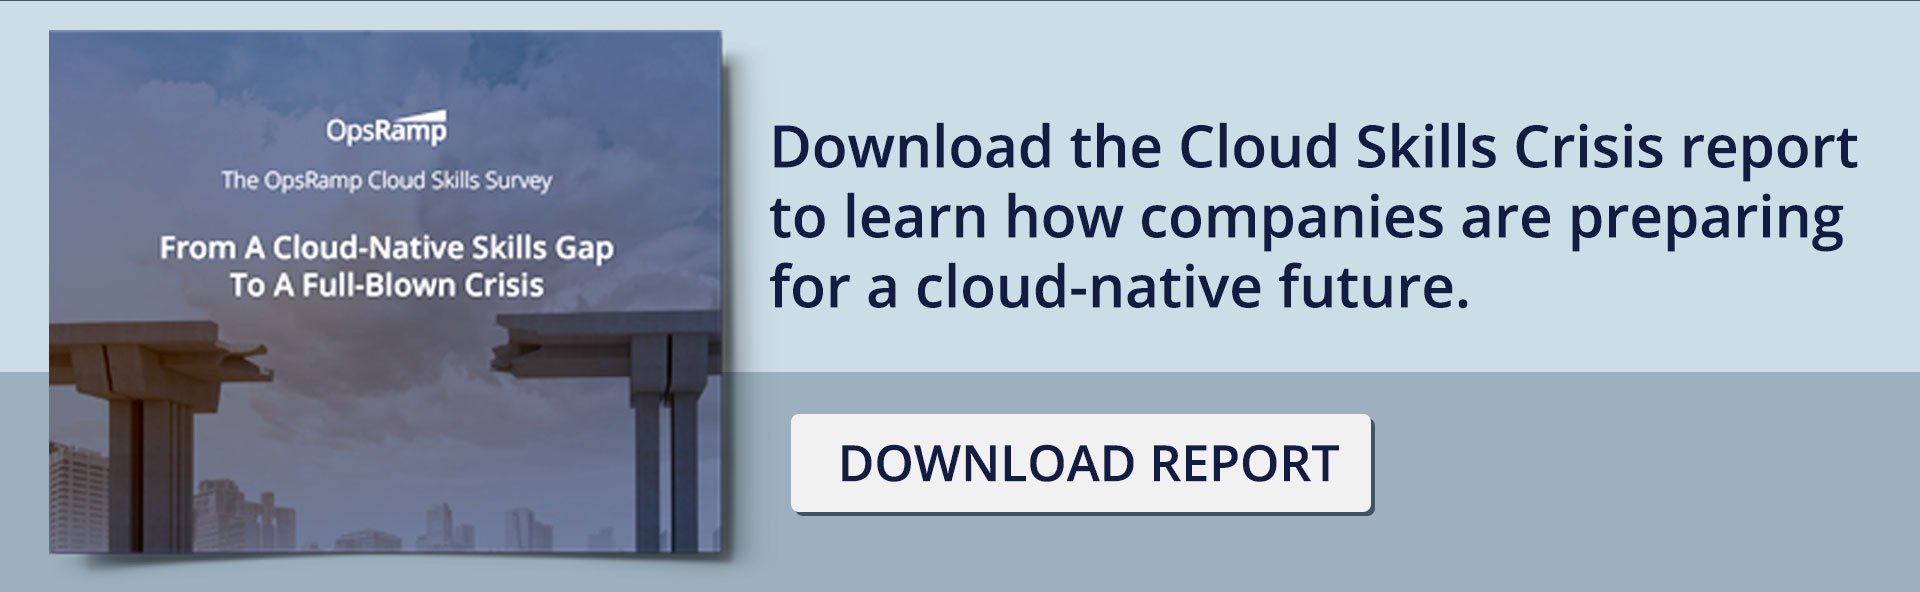 The Cloud Skills Crisis Report